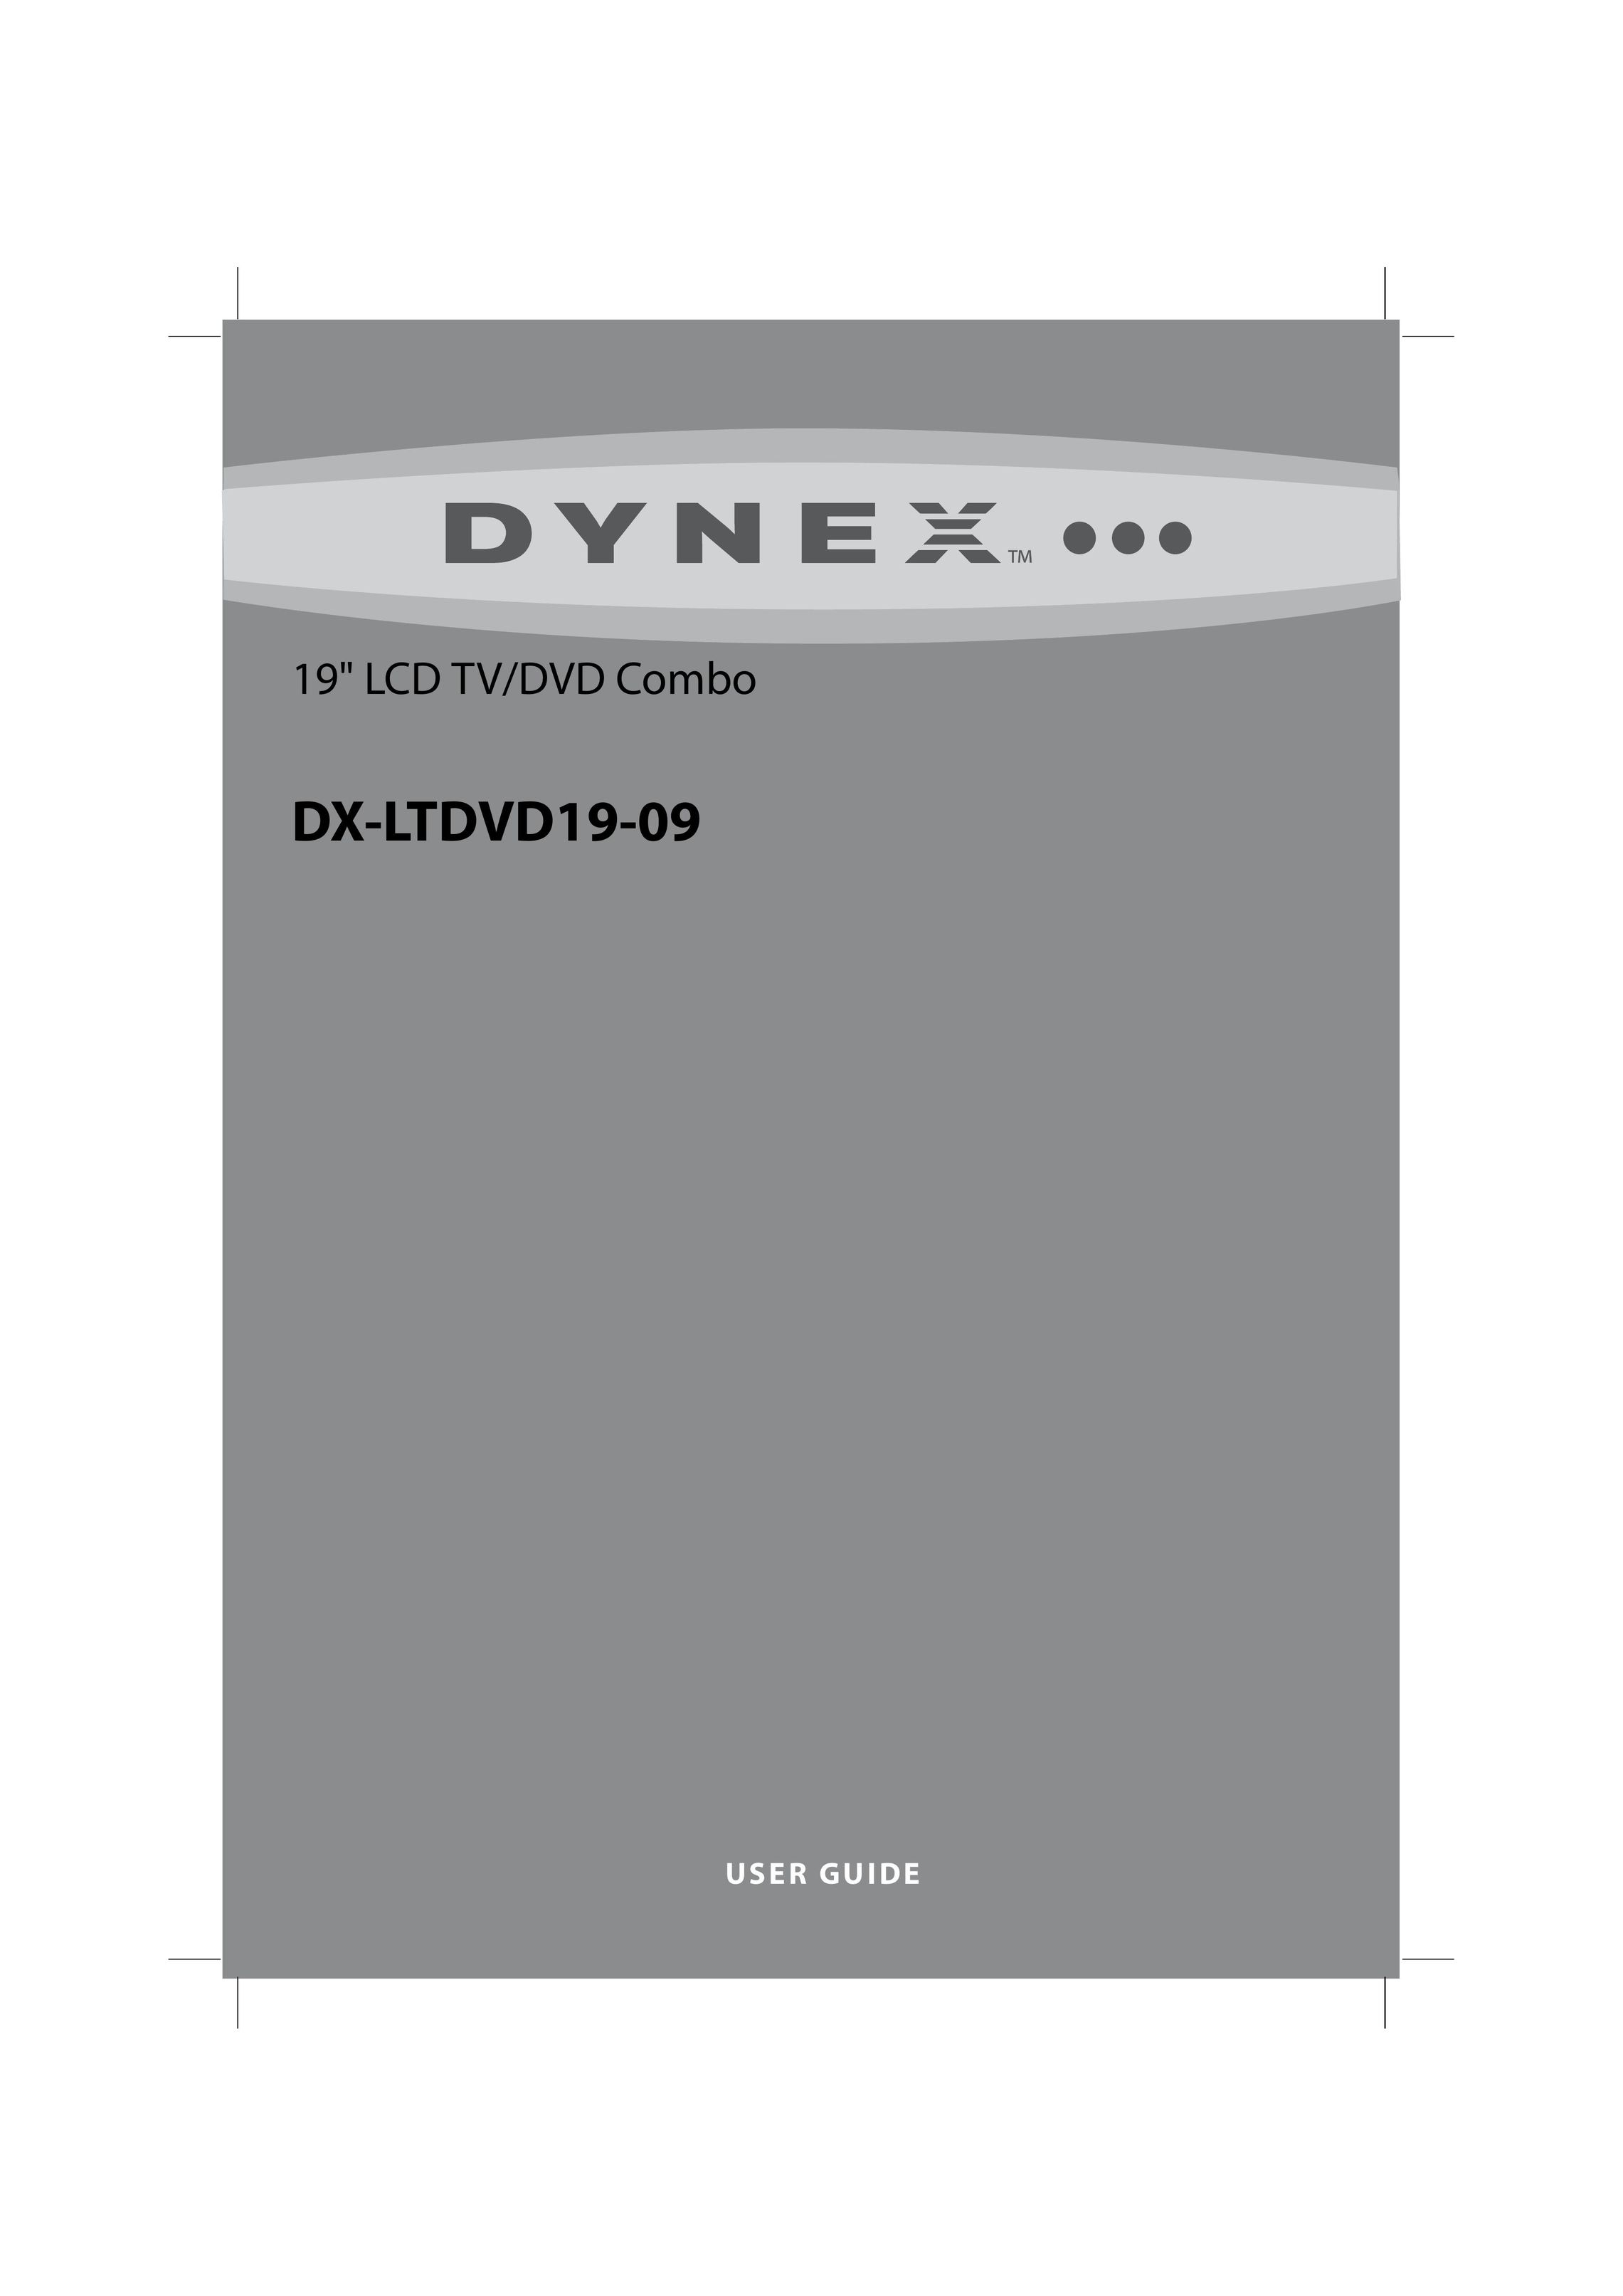 Dynex DX-LTDVD19-09 TV DVD Combo User Manual